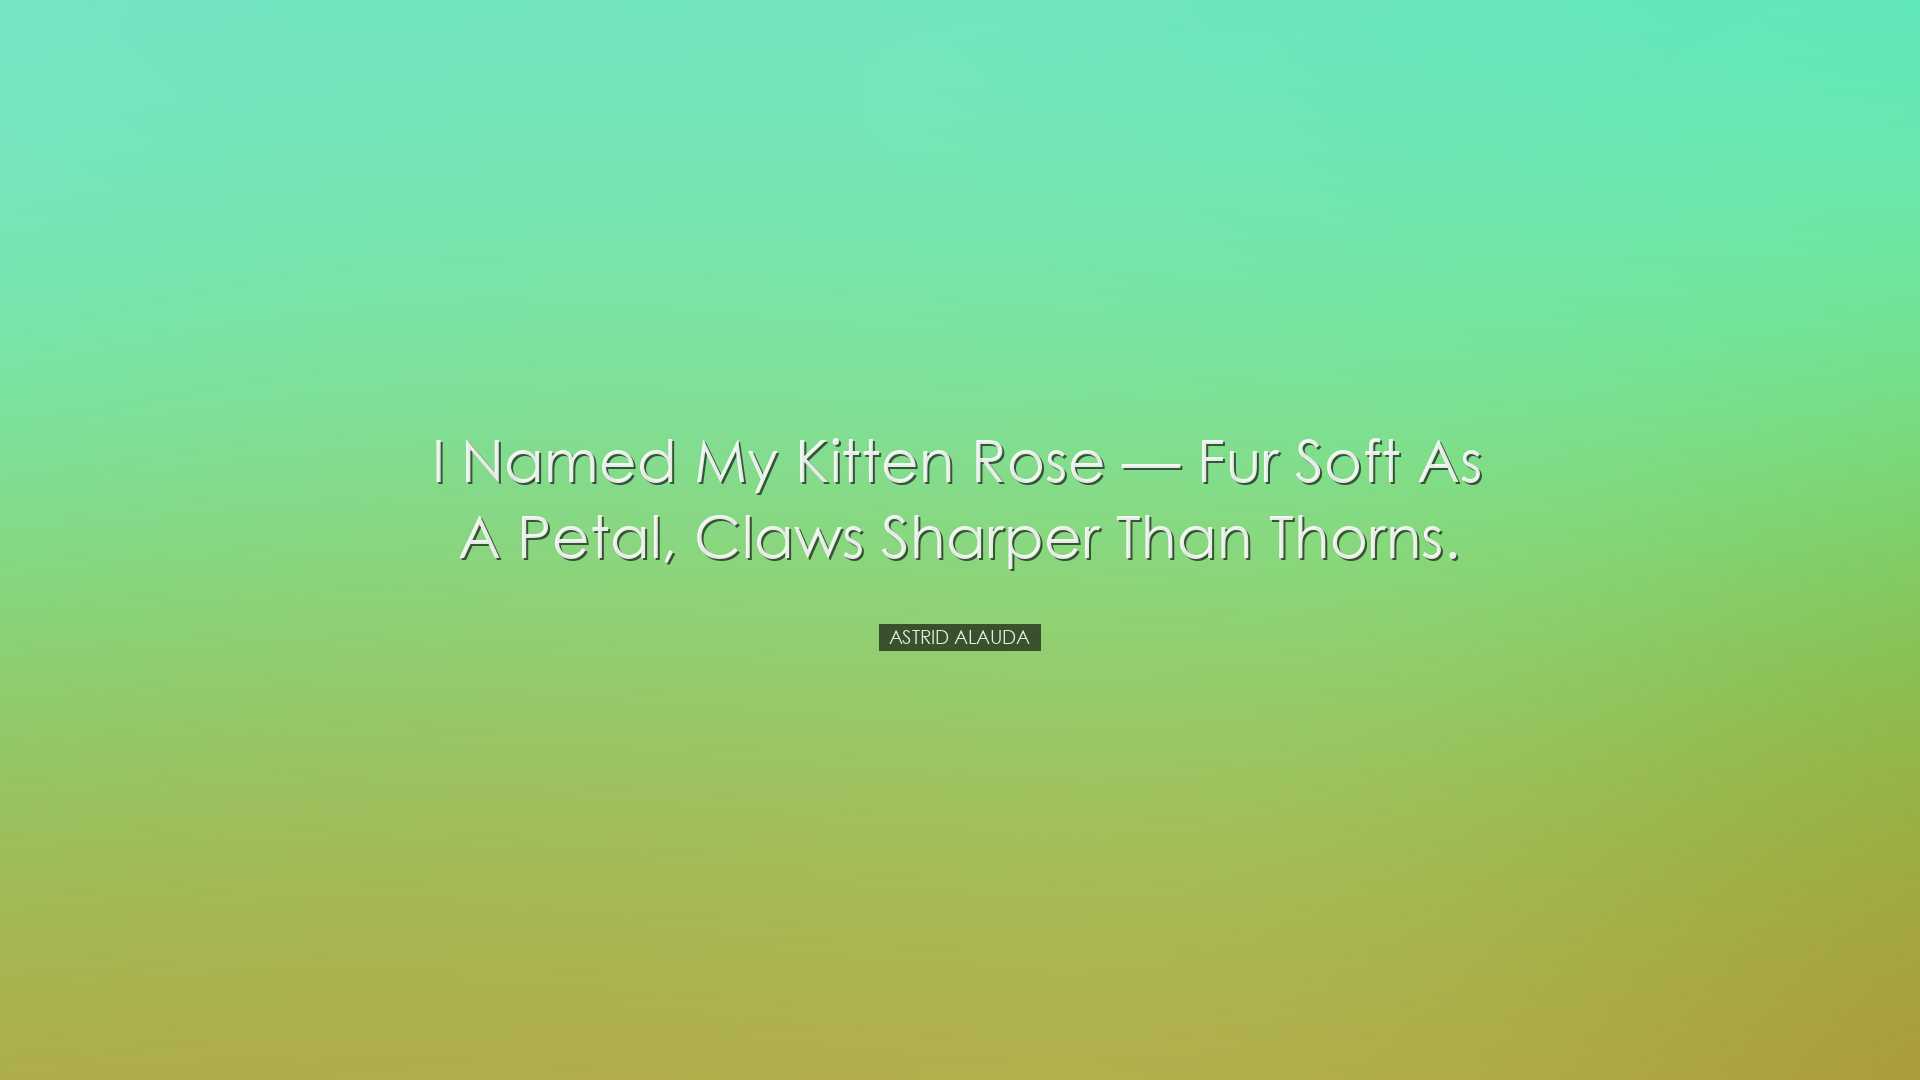 I named my kitten Rose — fur soft as a petal, claws sharper